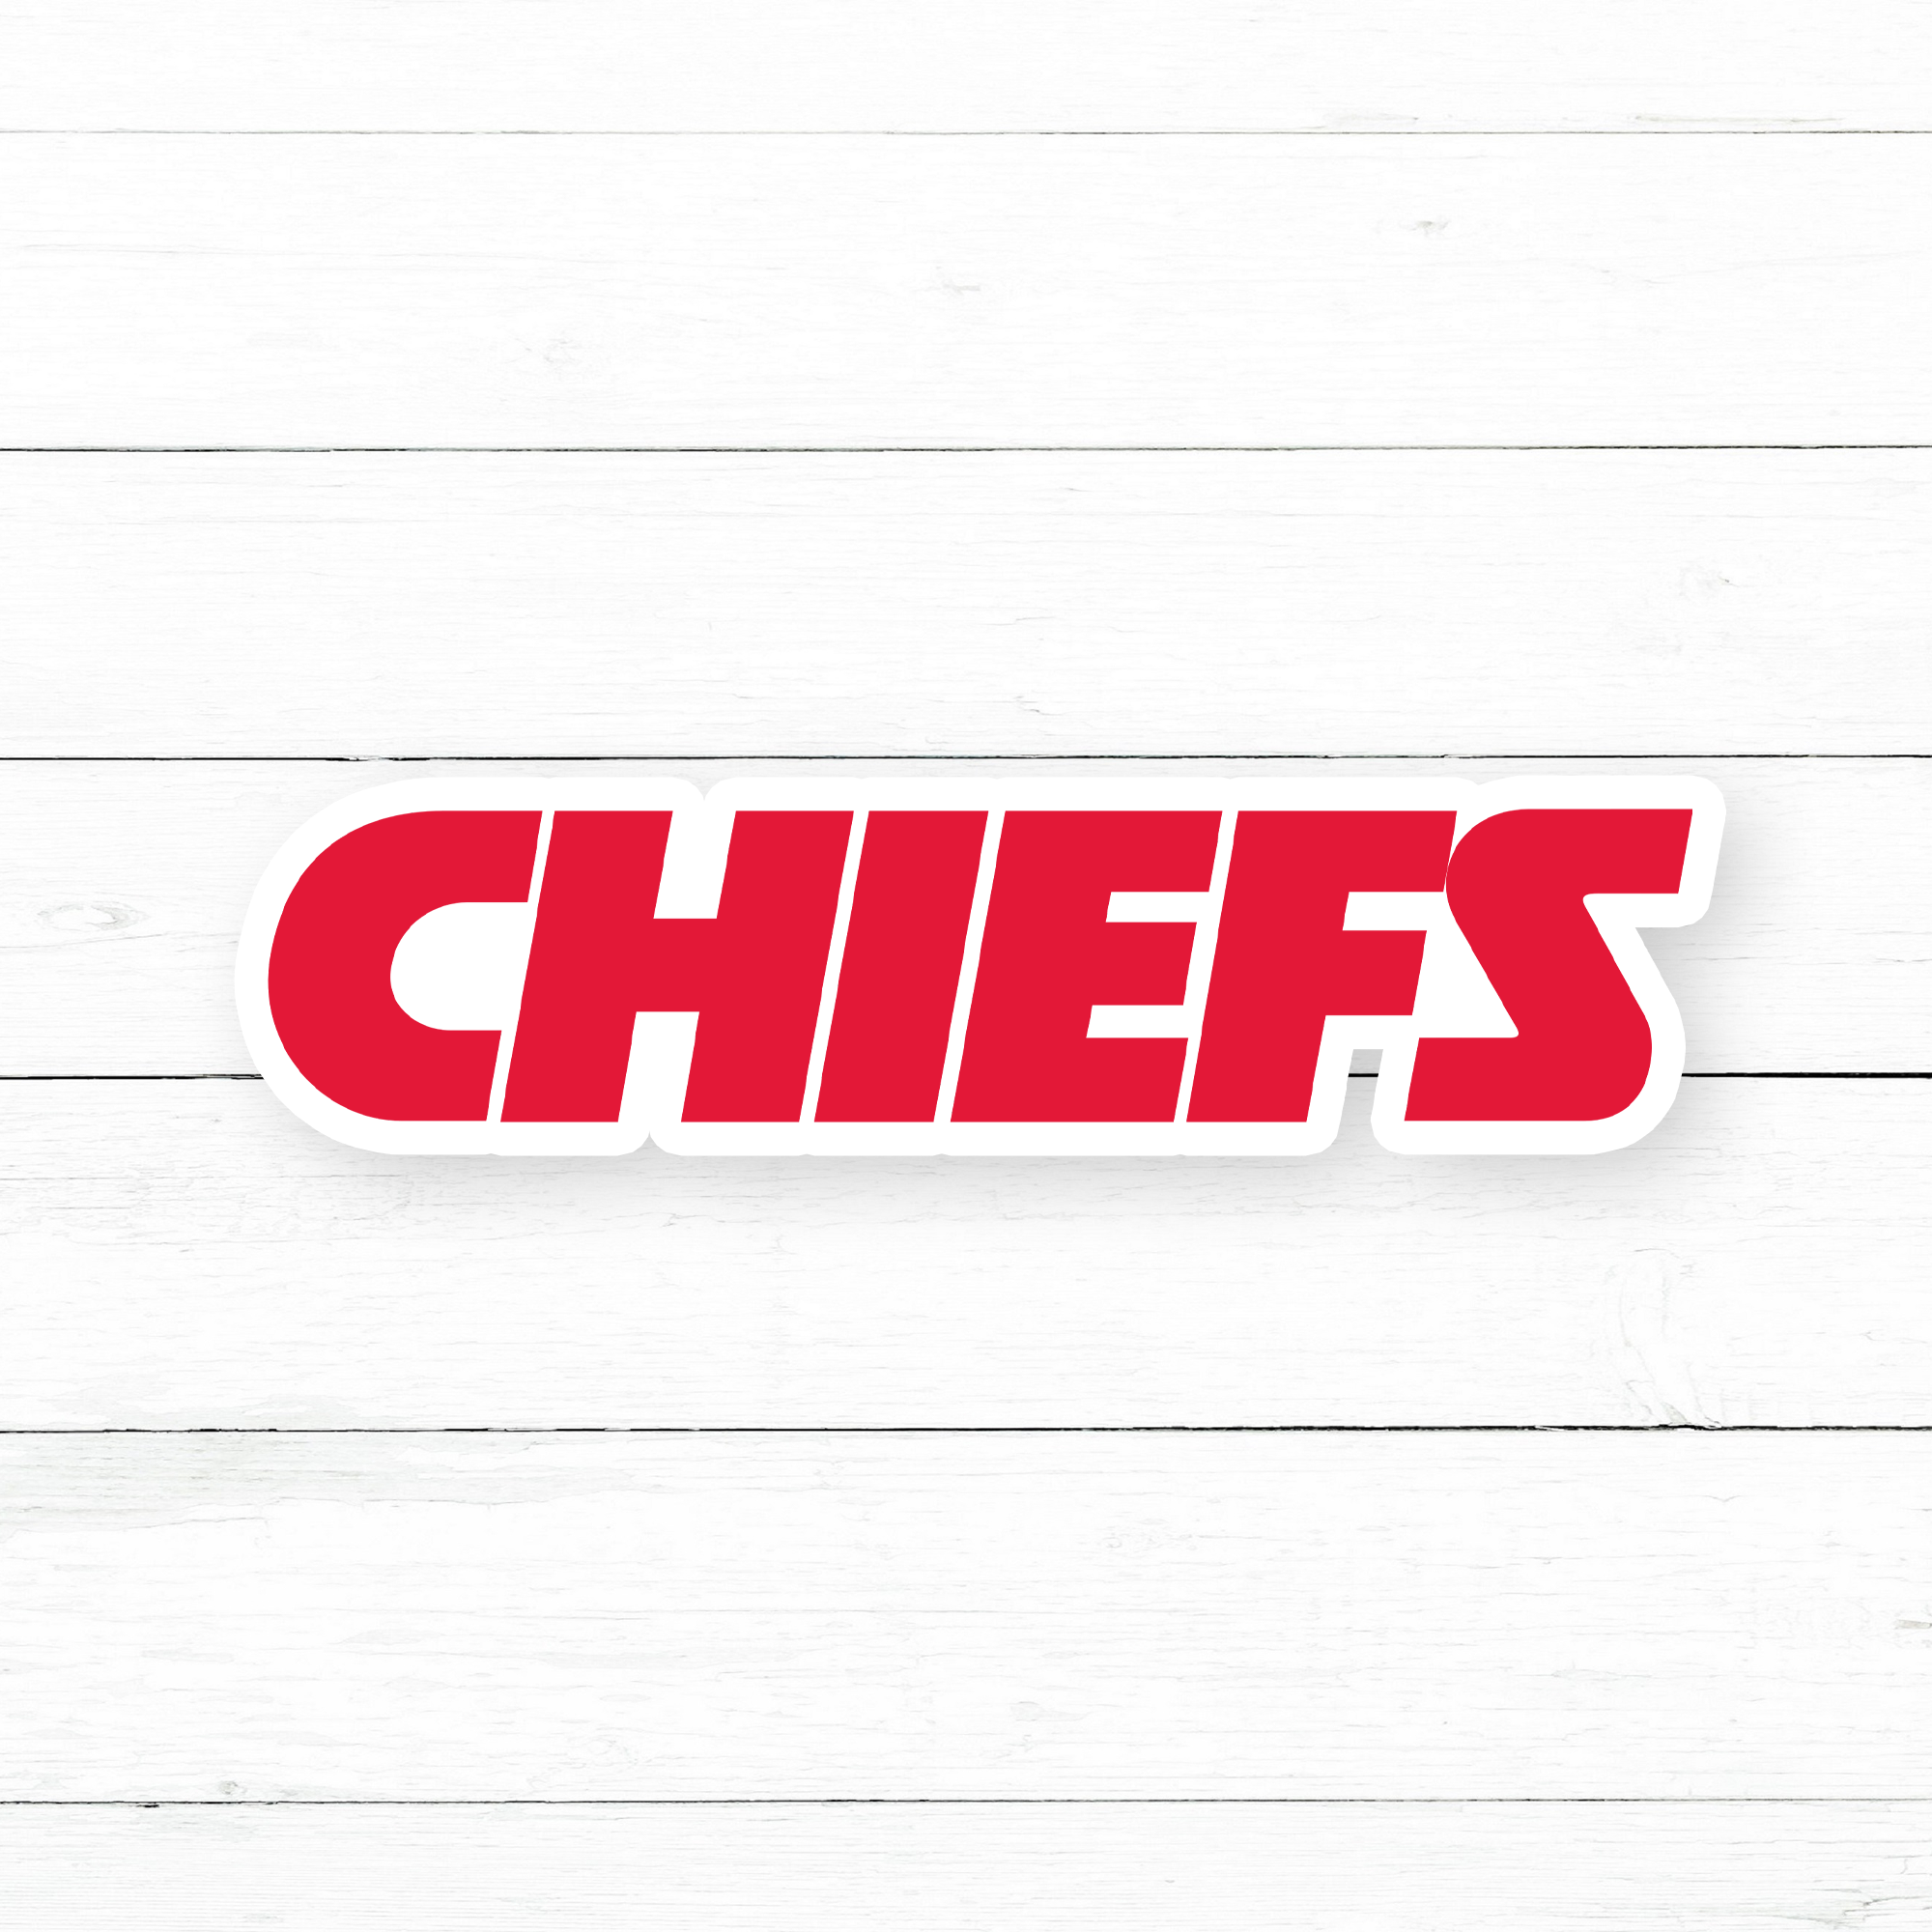 Kansas City Chiefs Stickers | Choose Your Design